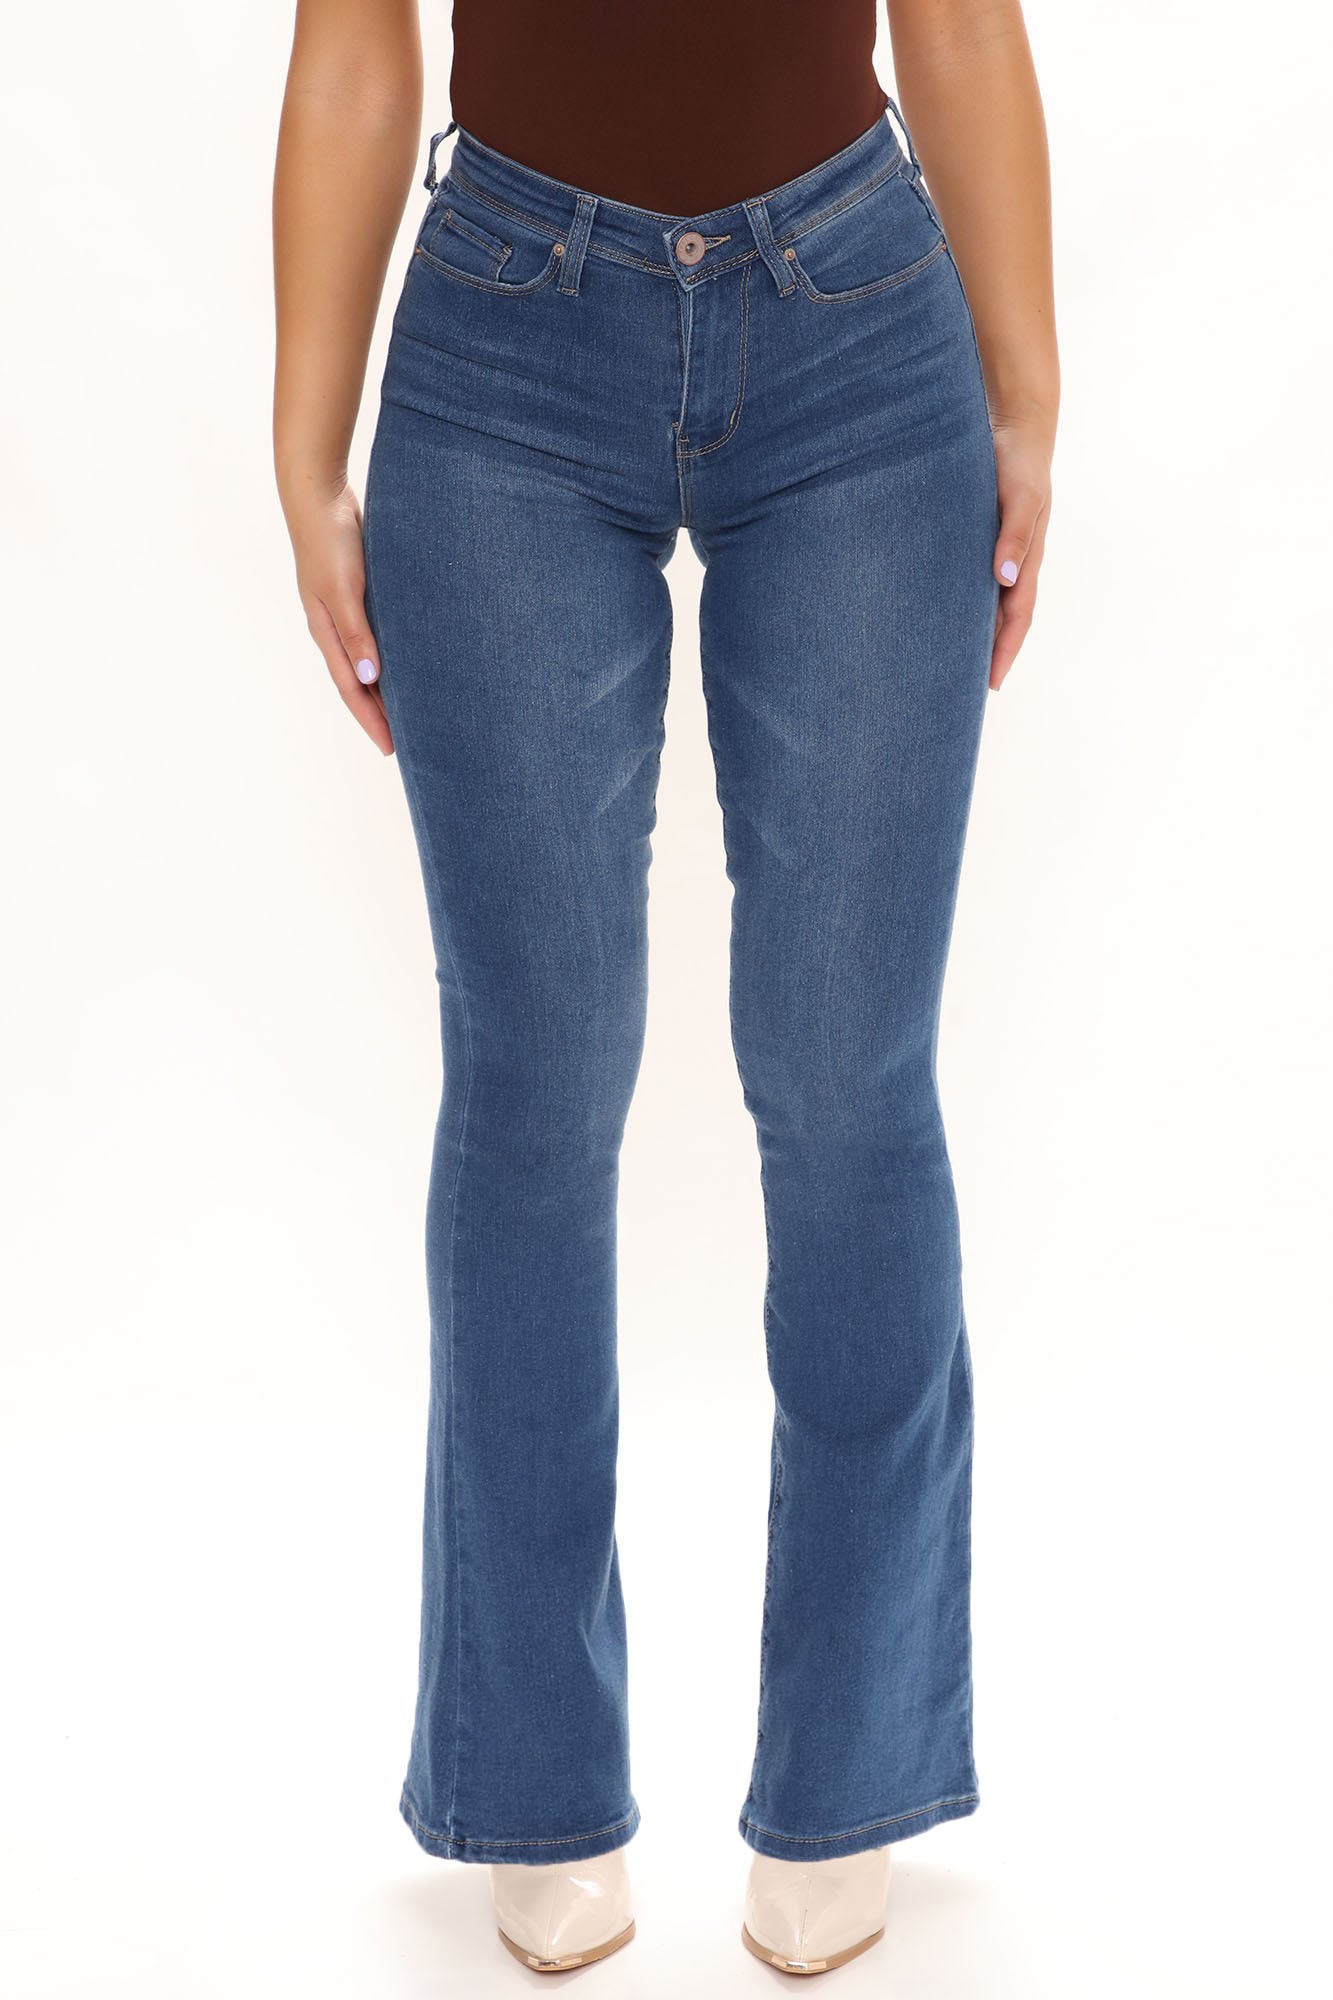 Back On Top Stretch Flare Jeans - Medium Blue Wash – InsStreet